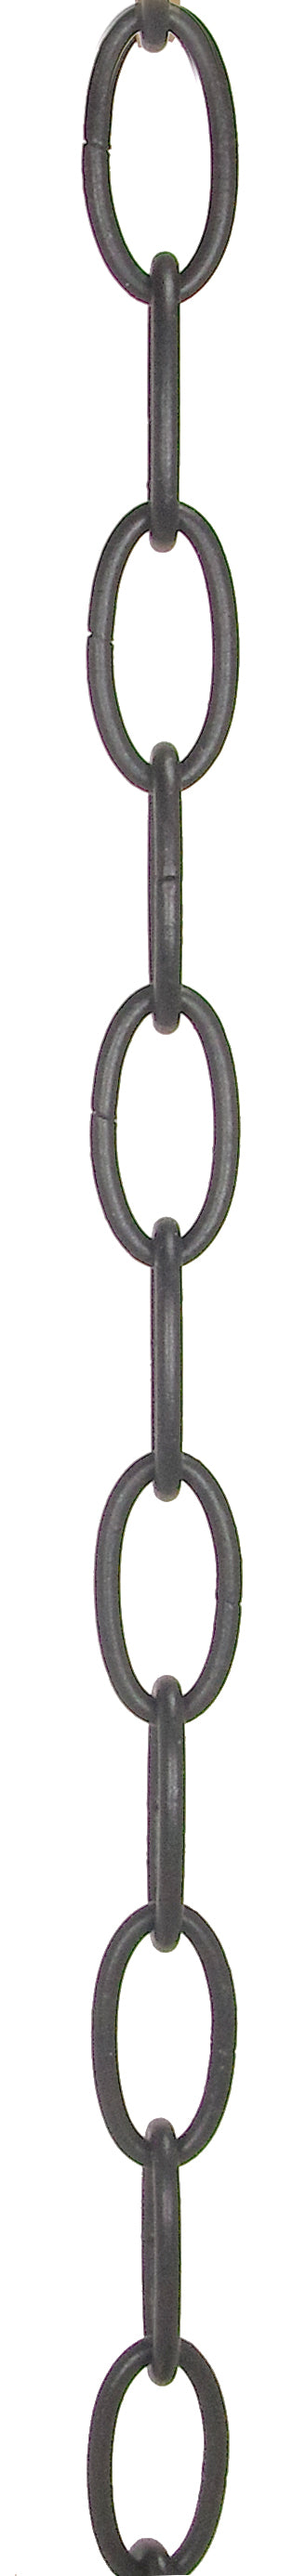 SATCO/NUVO 8 Gauge Chain Black Finish 1 Yard Len 11/2 Inch Link Len 7/8 Inch Link Wide 1/8 Inch Thick 100 Yard Per Carton 35 Pounds Maximum (79-457)